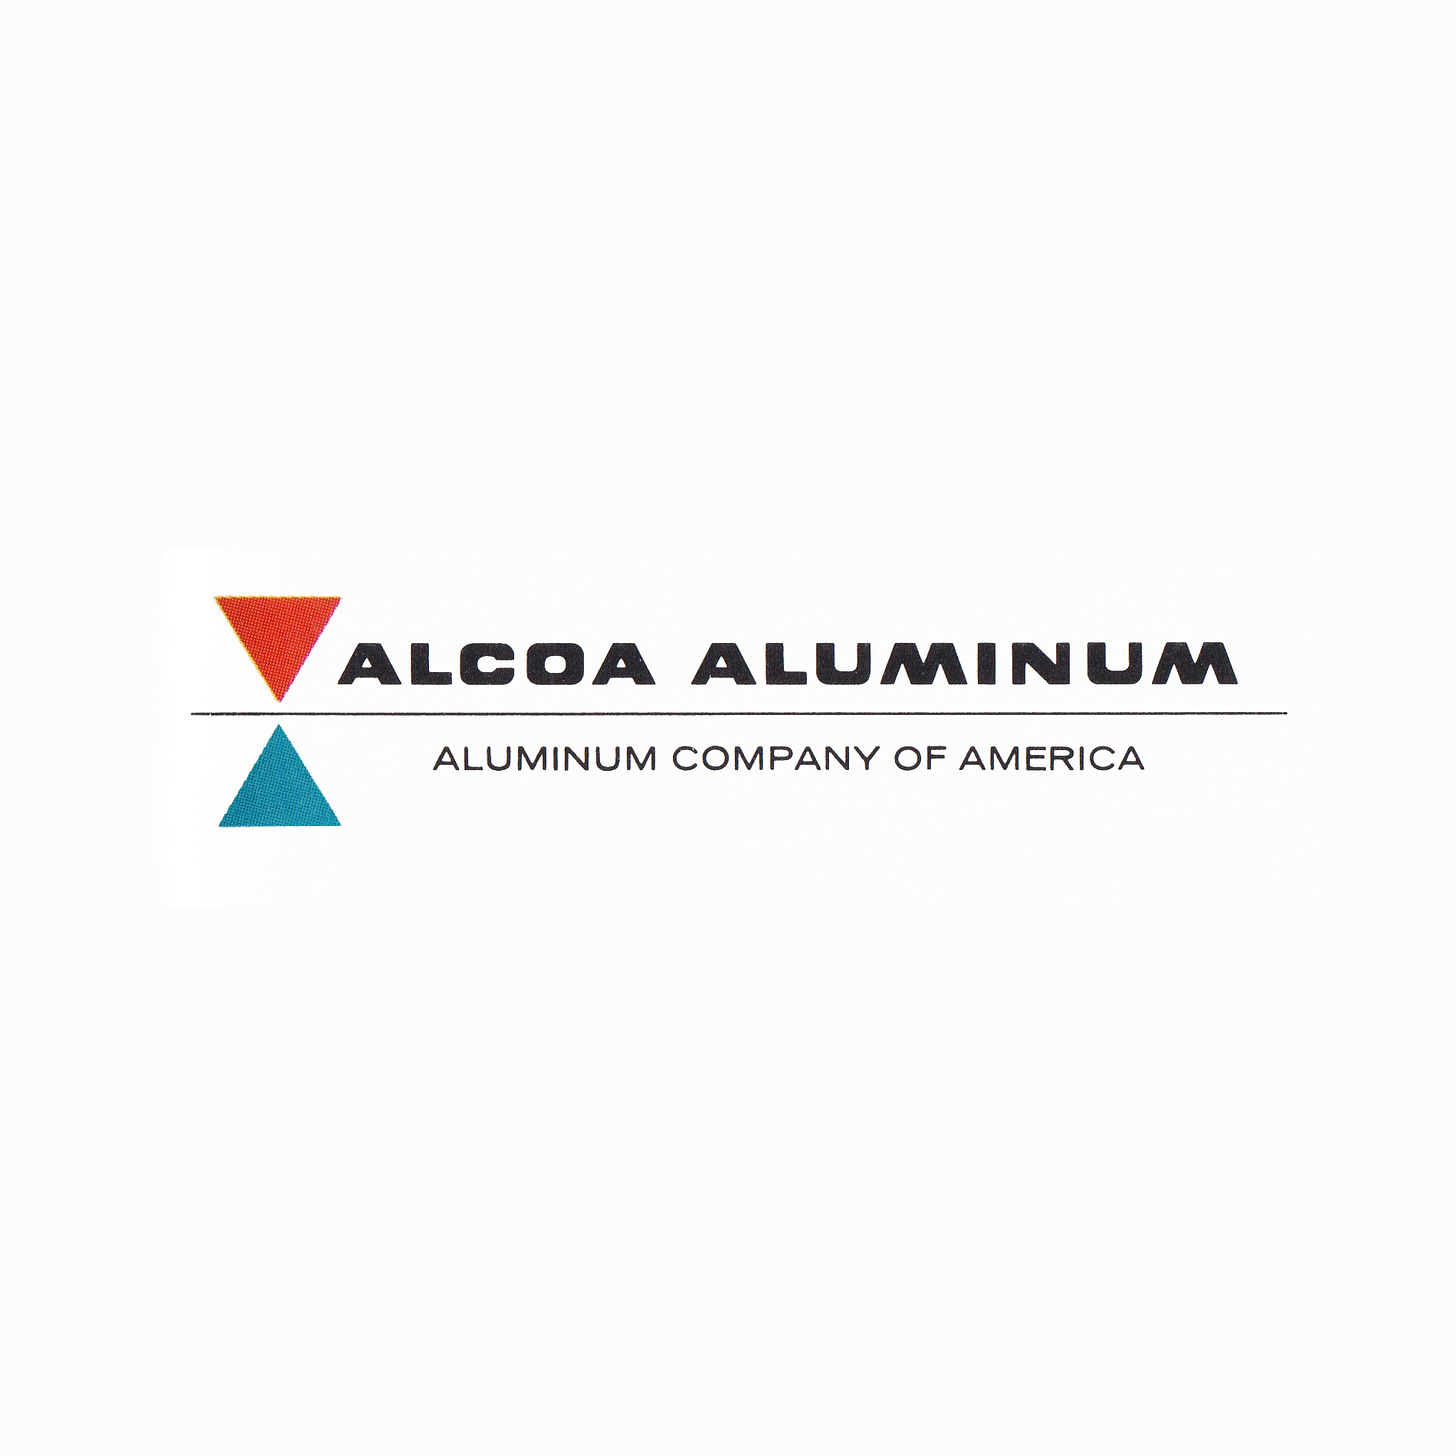 Original Alcoa Aluminum logo design